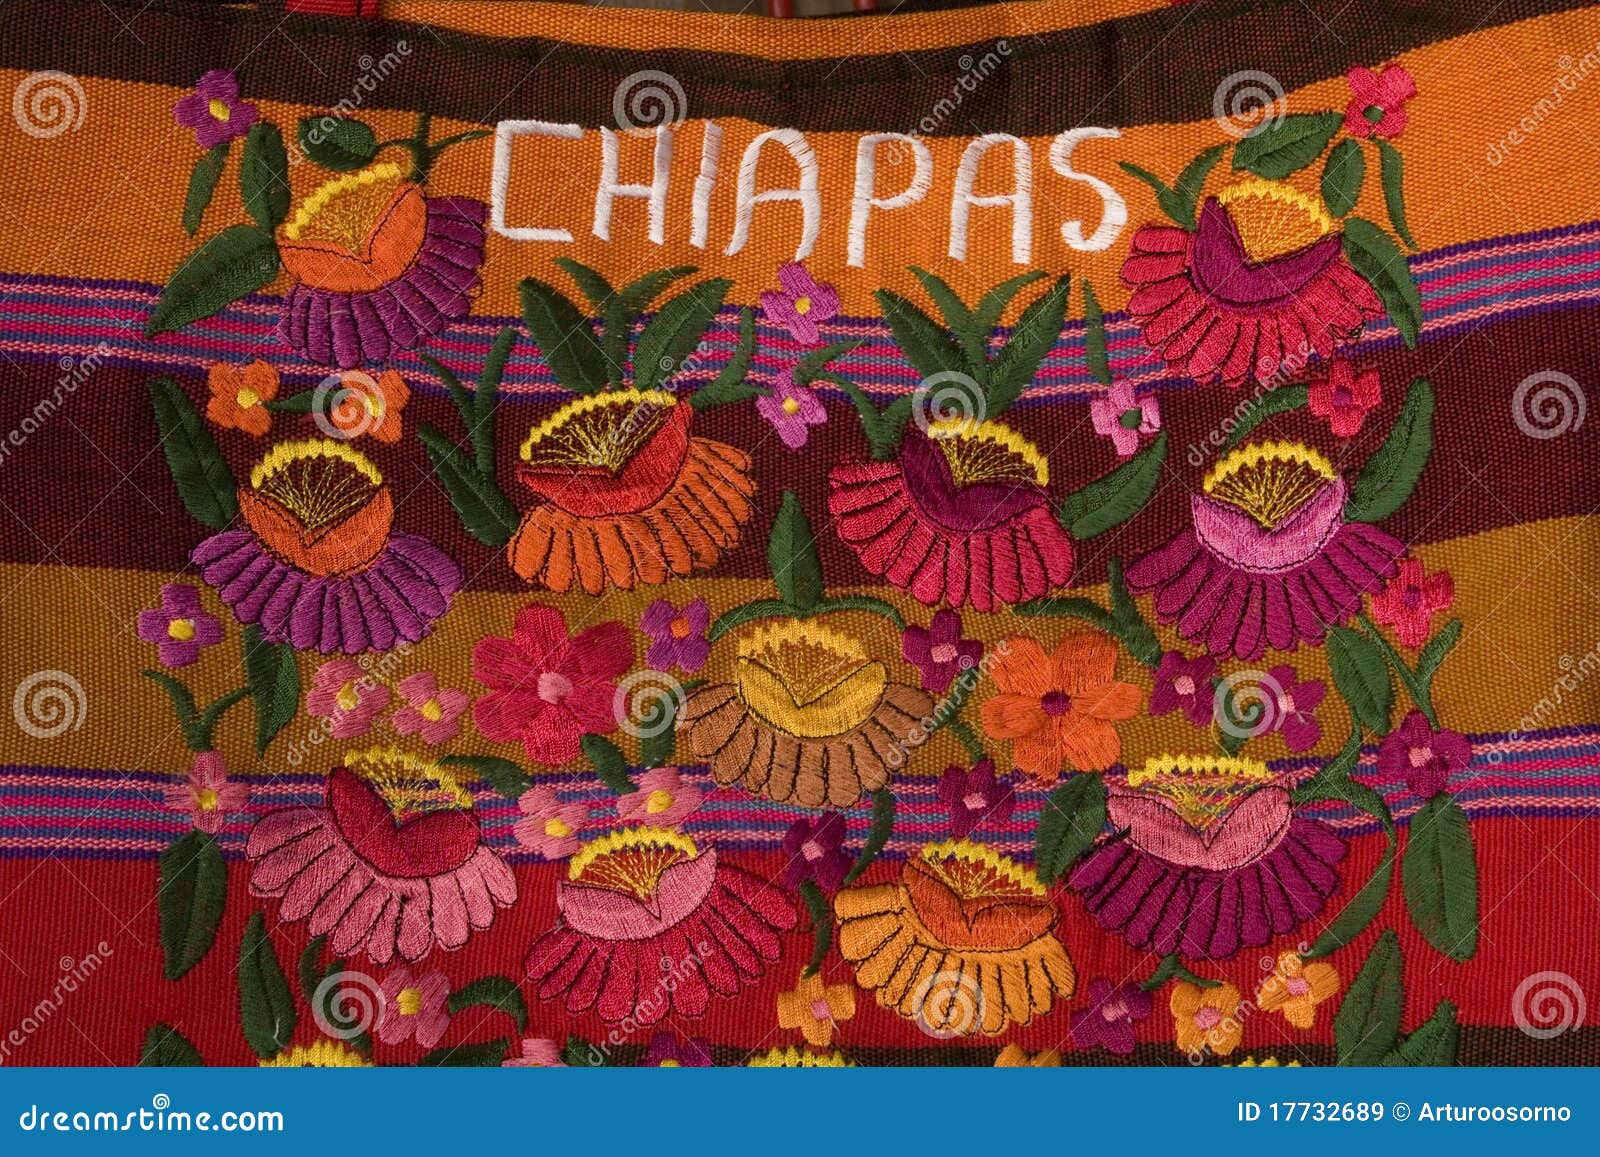 decorative art from chiapas